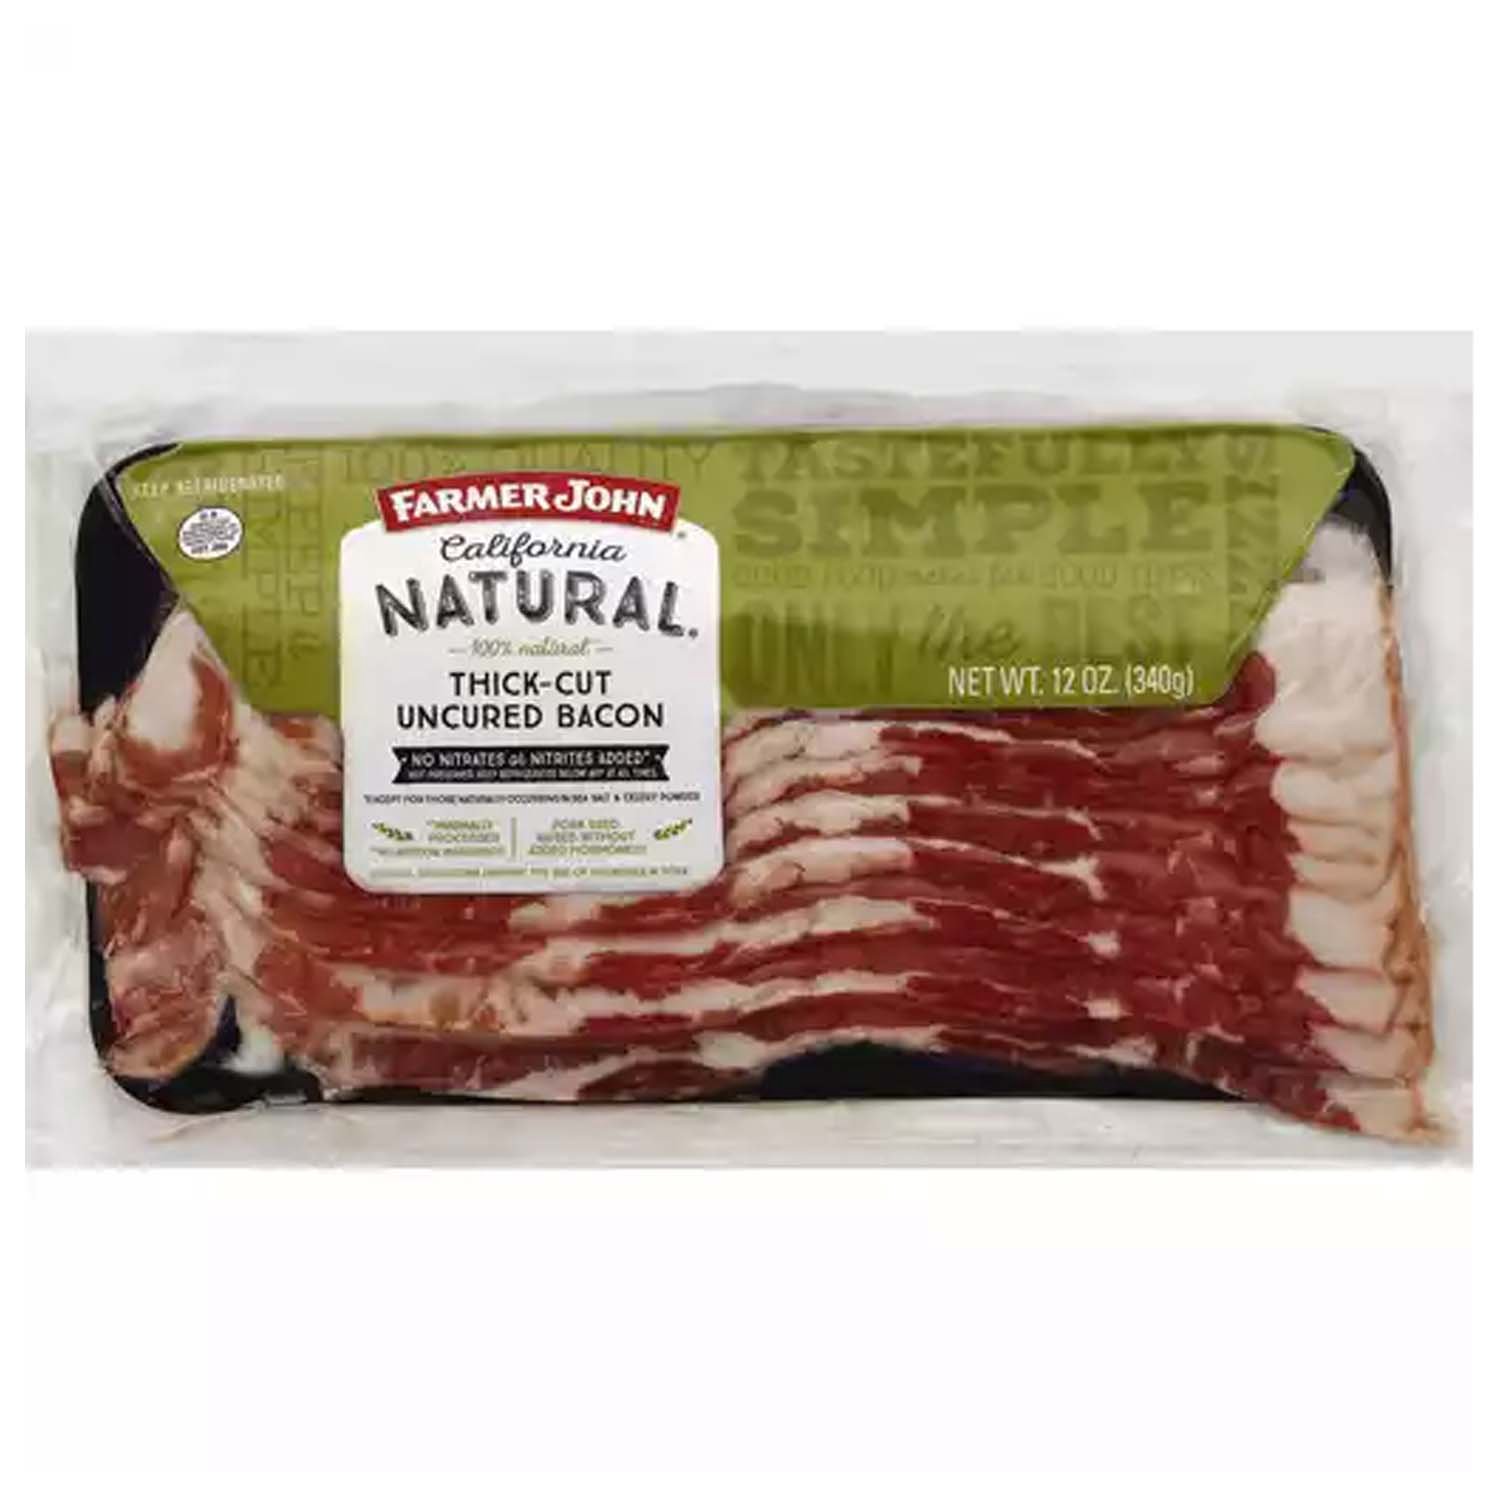 Bacon! 'Nuff said 😁 #bacon #farmhousedecor #charcuterieboard